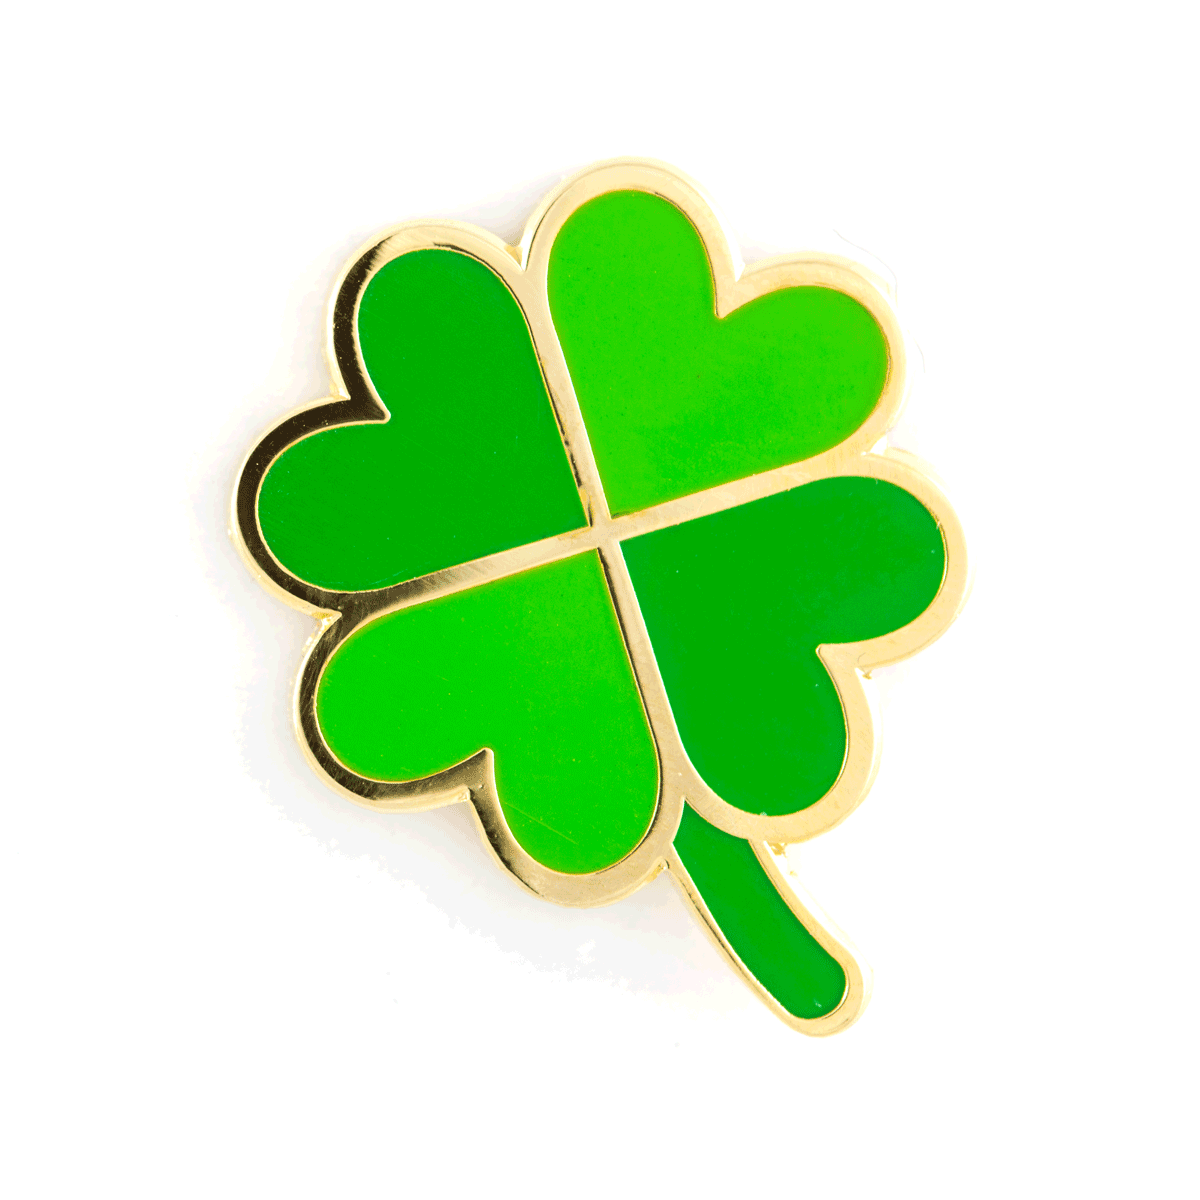 Green Four Leaf Clover Pin - 4 Leaf Clover Lapel Pins